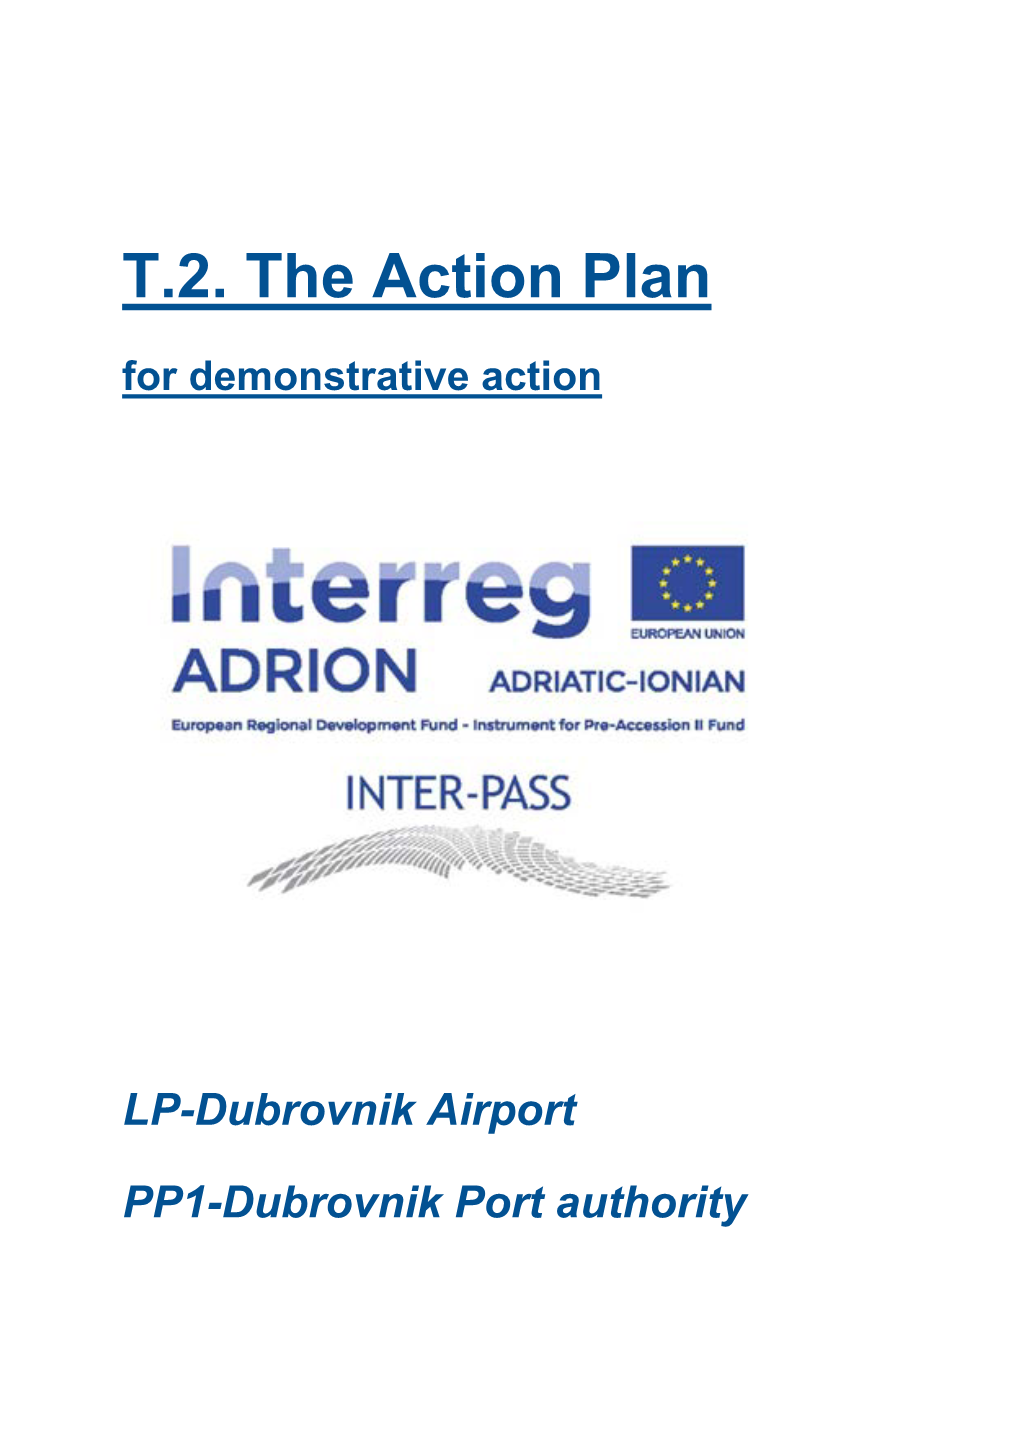 Action Plan for Demonstrative Action DUBROVNIK